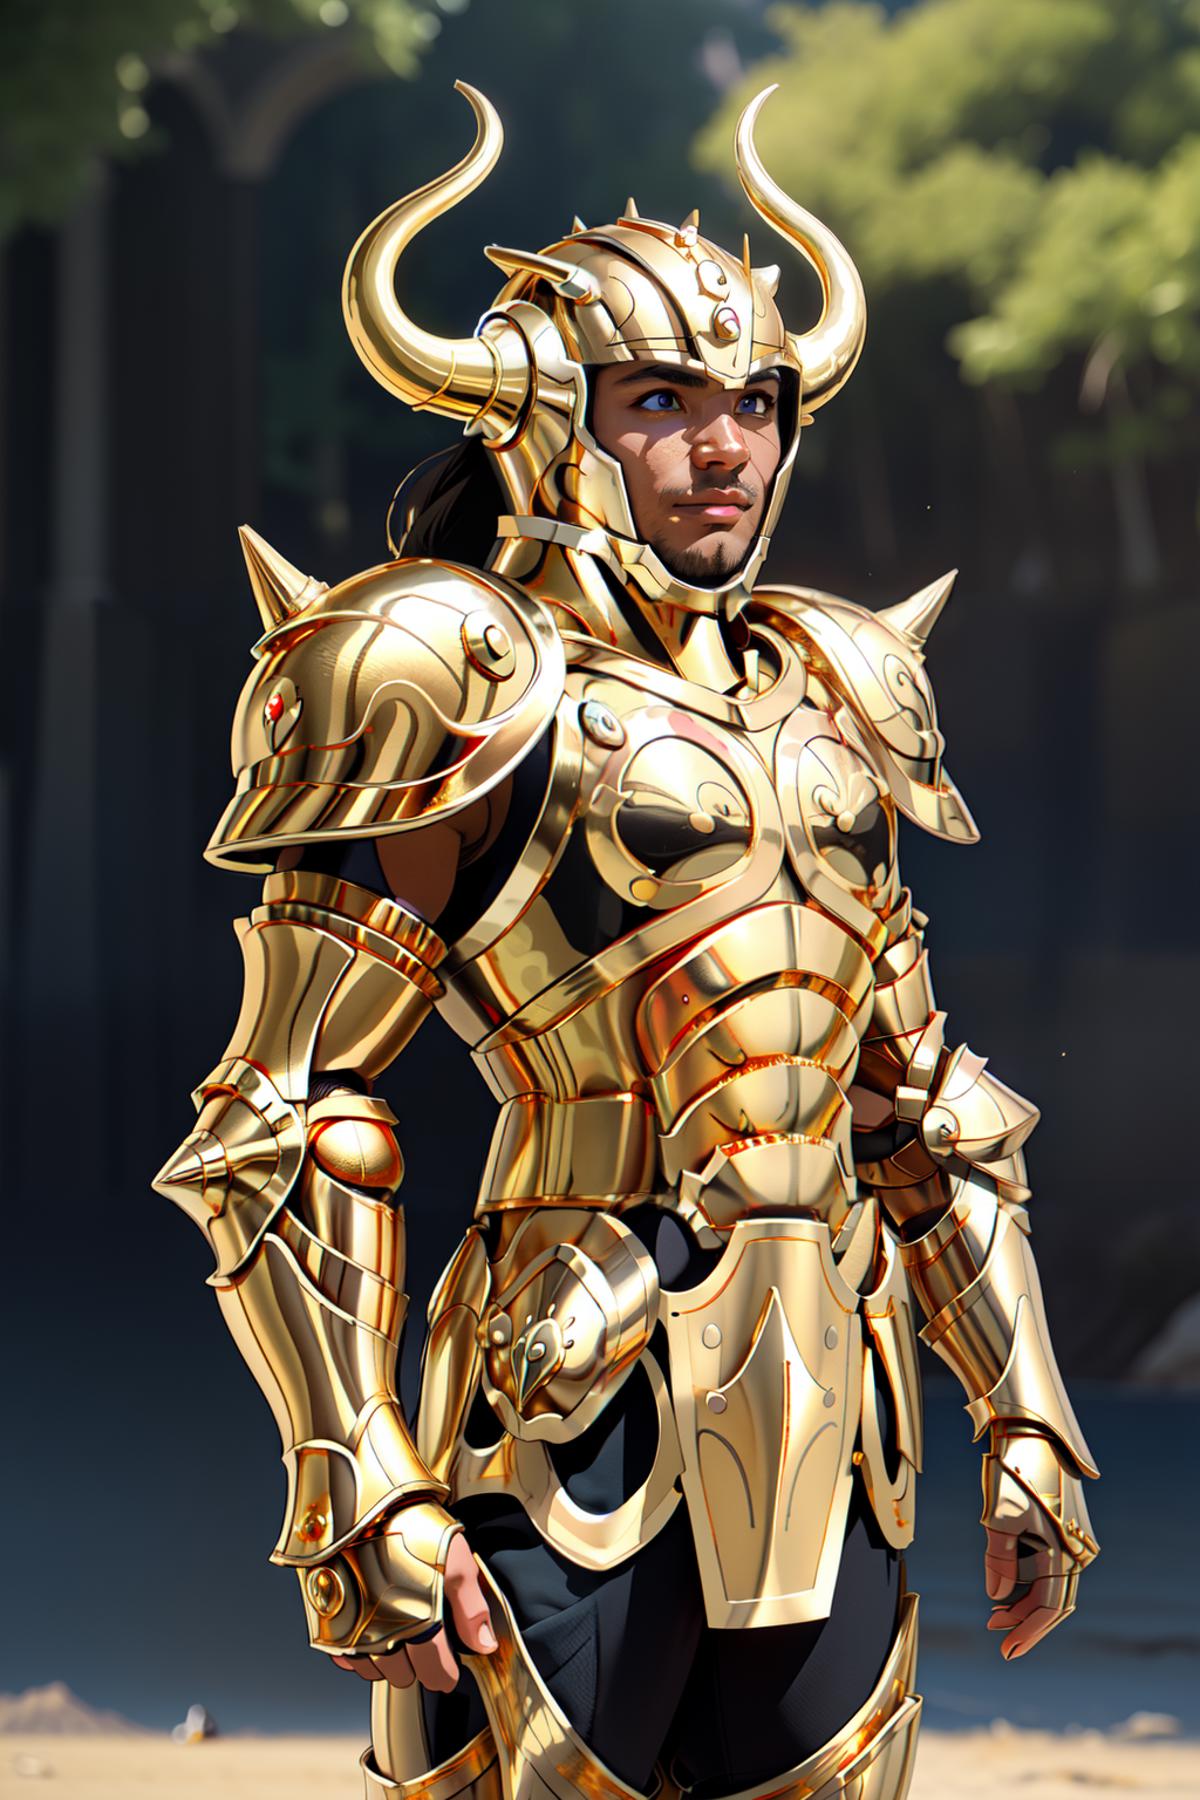 Saint Seiya Taurus Armor image by victorc25744